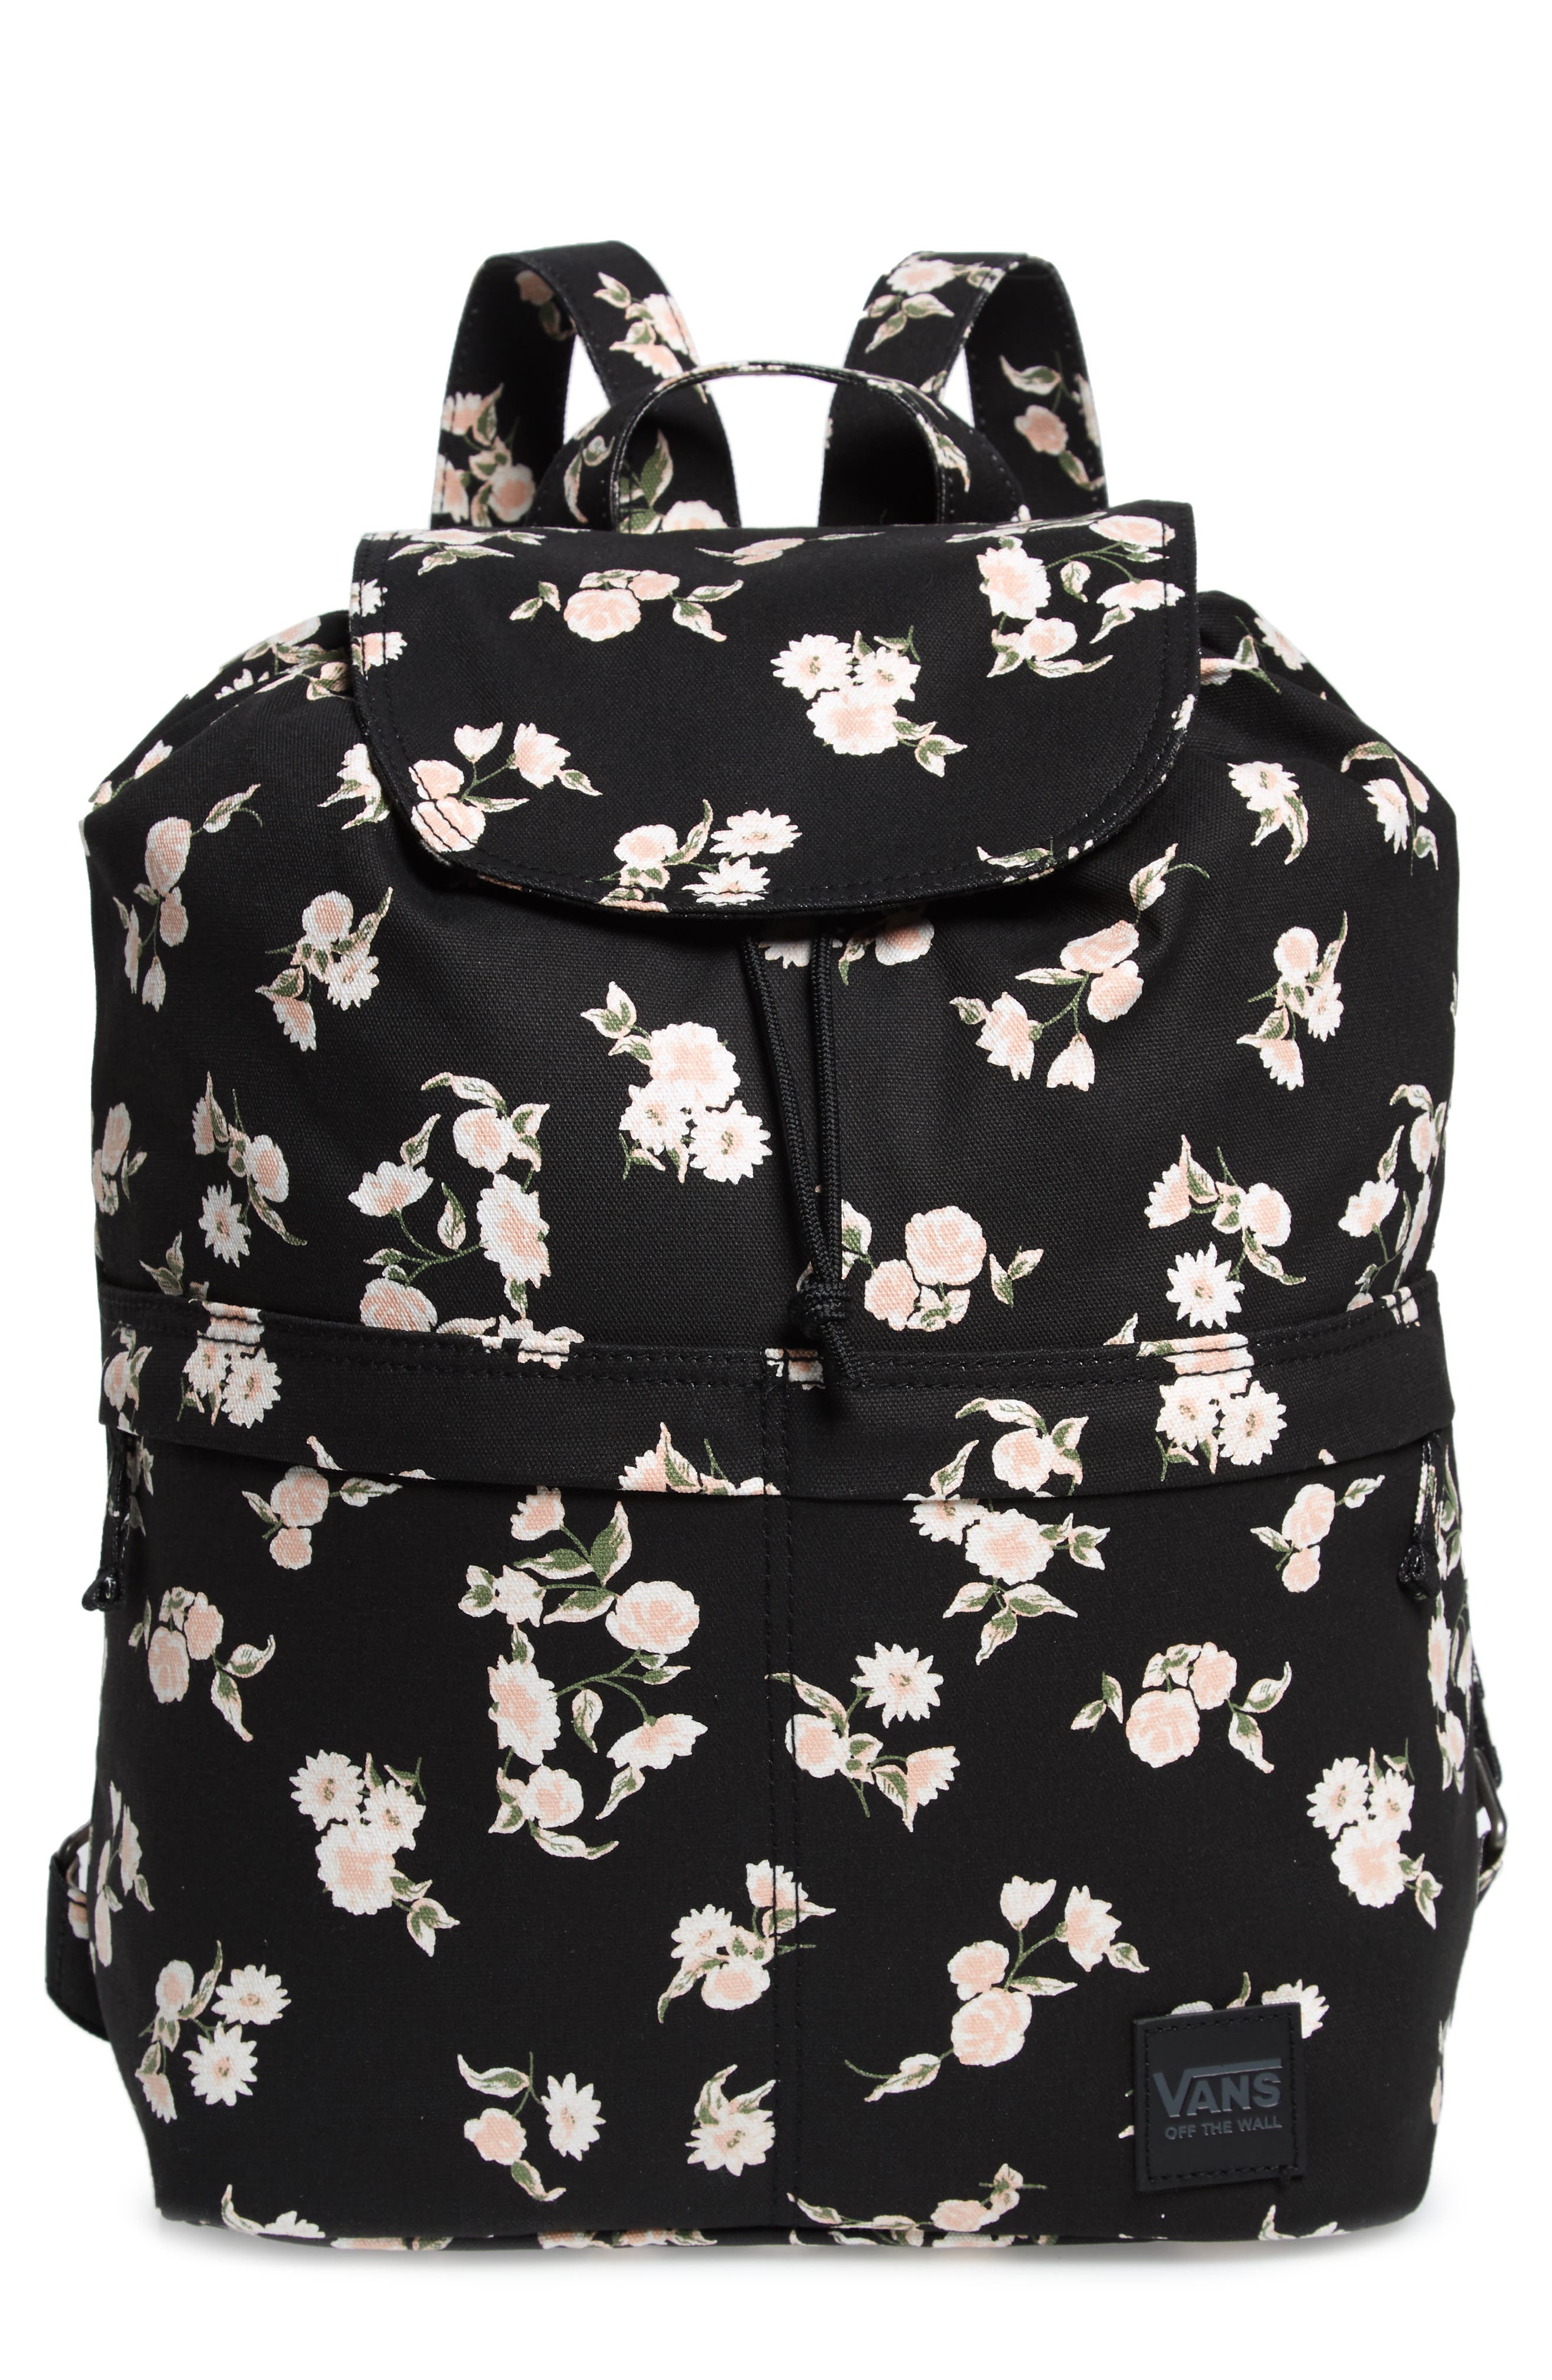 black and white floral vans backpack